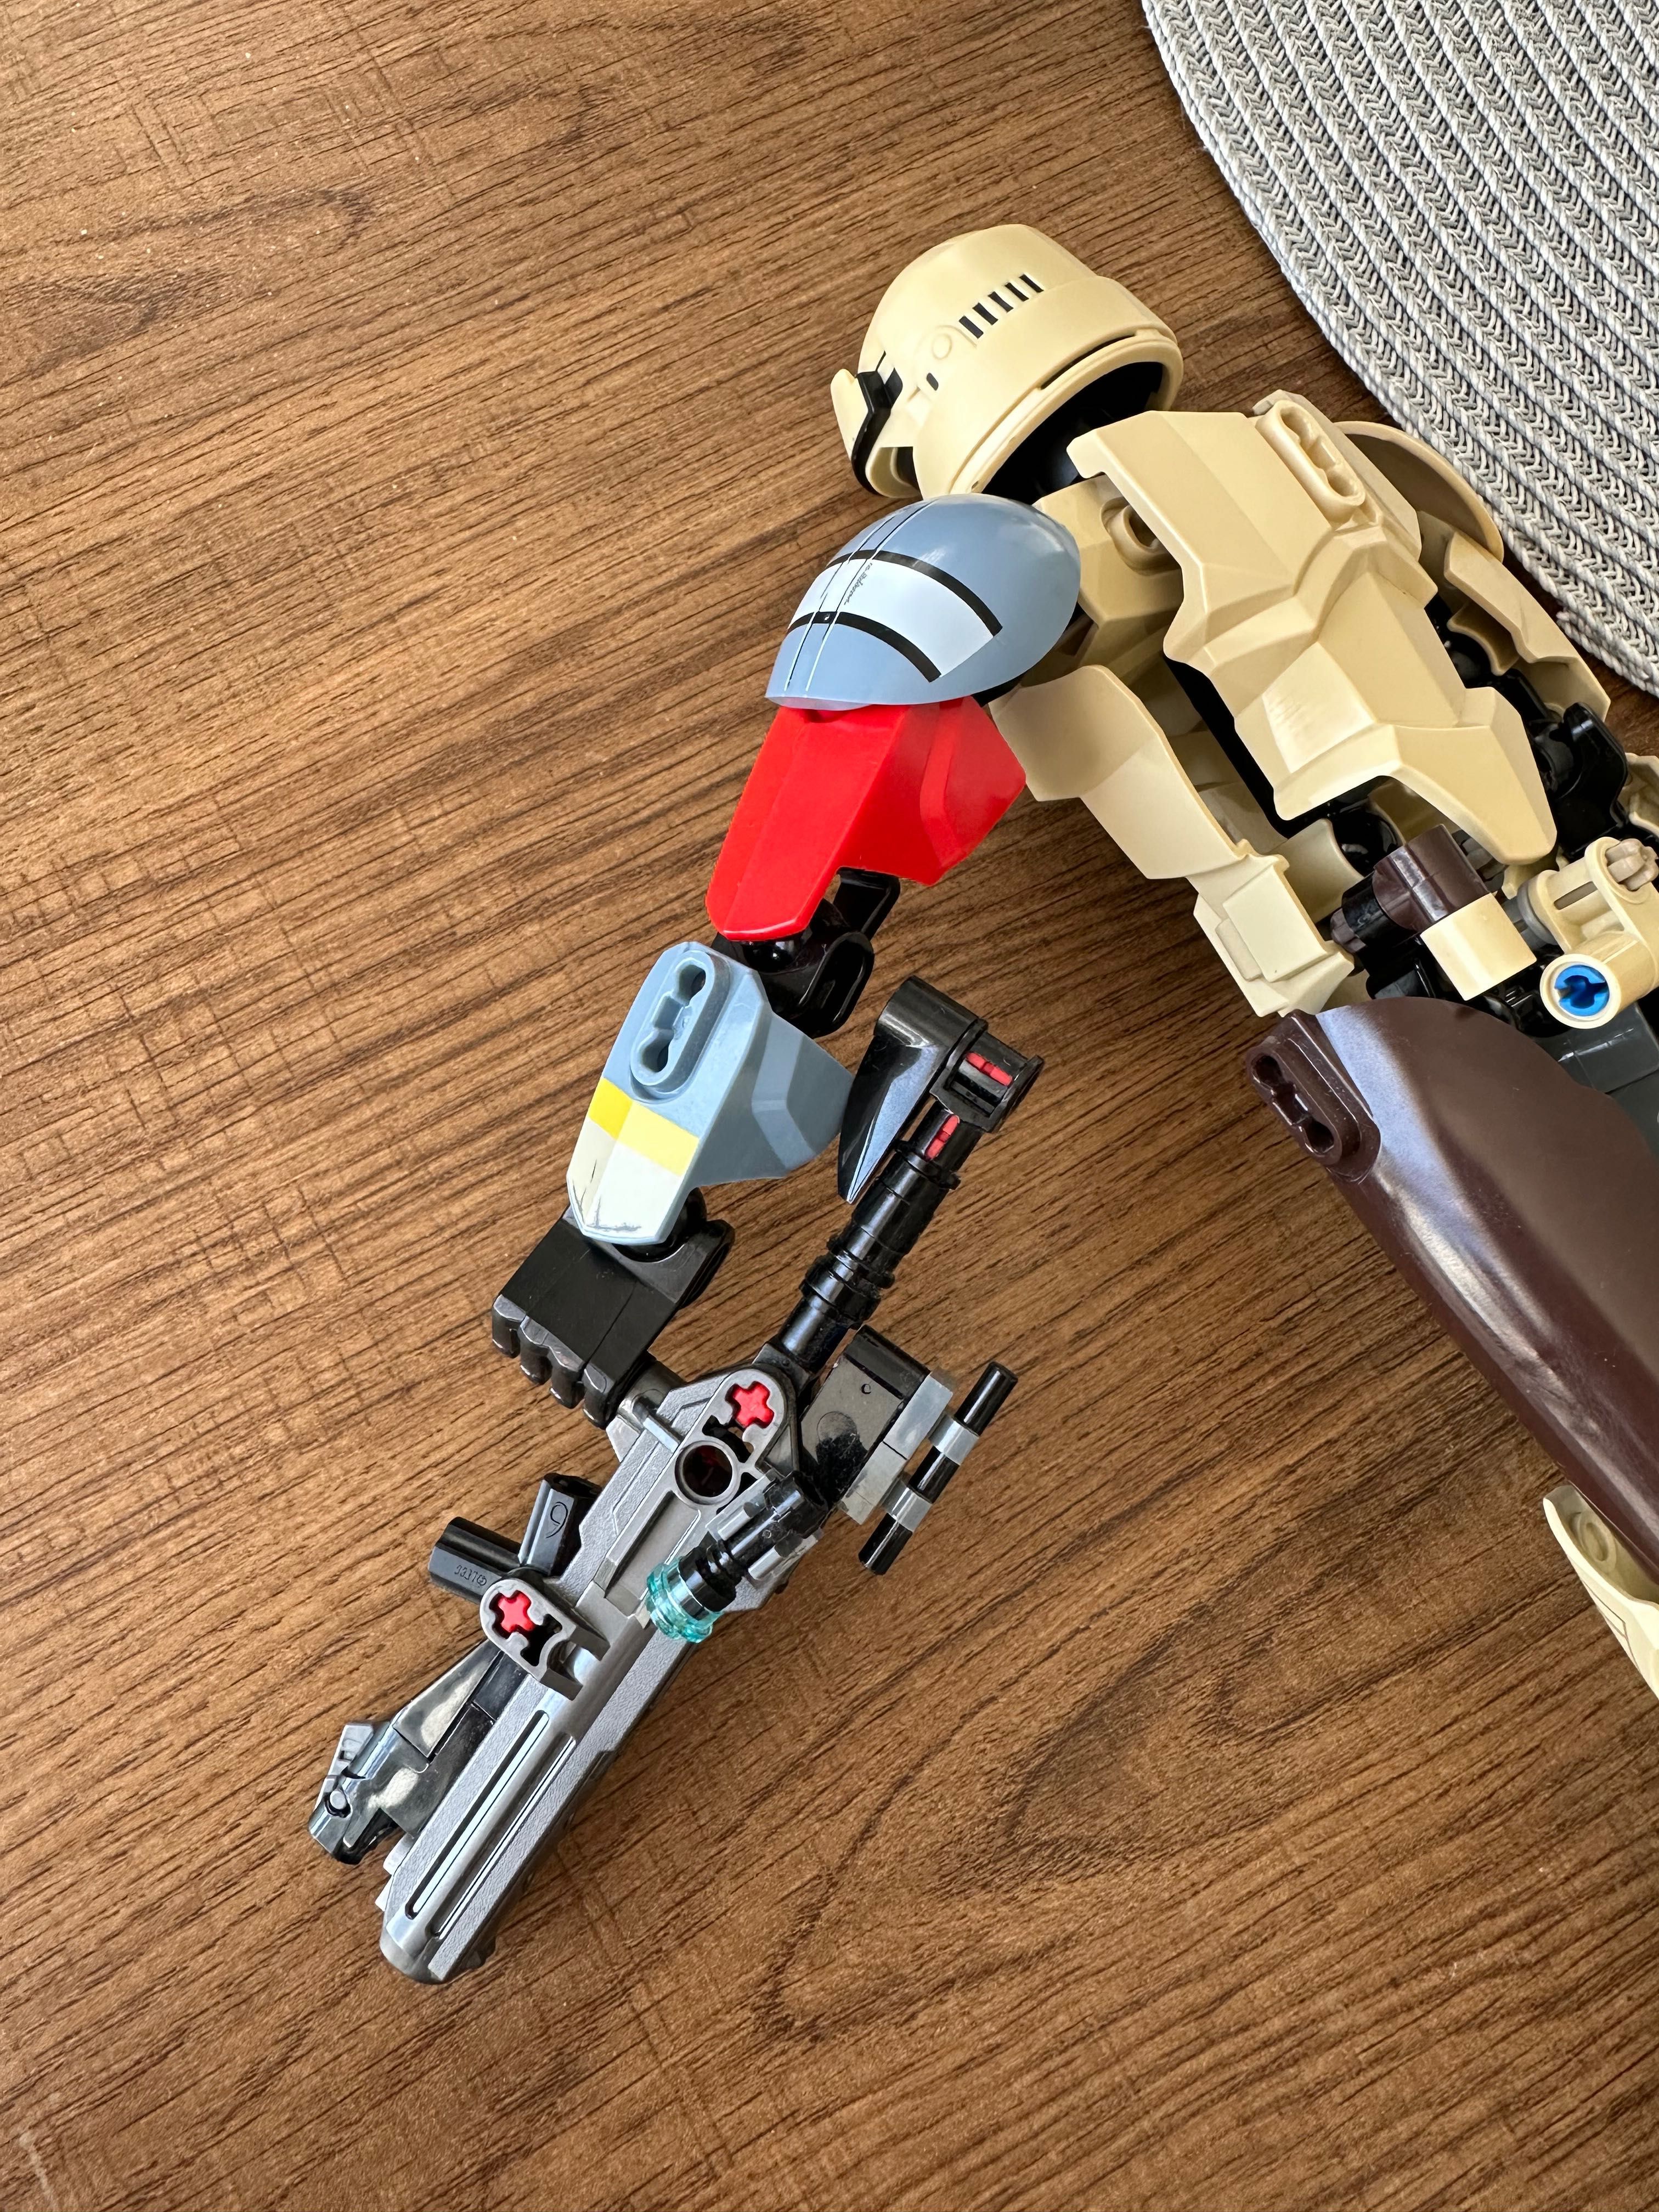 Lego star wars робот